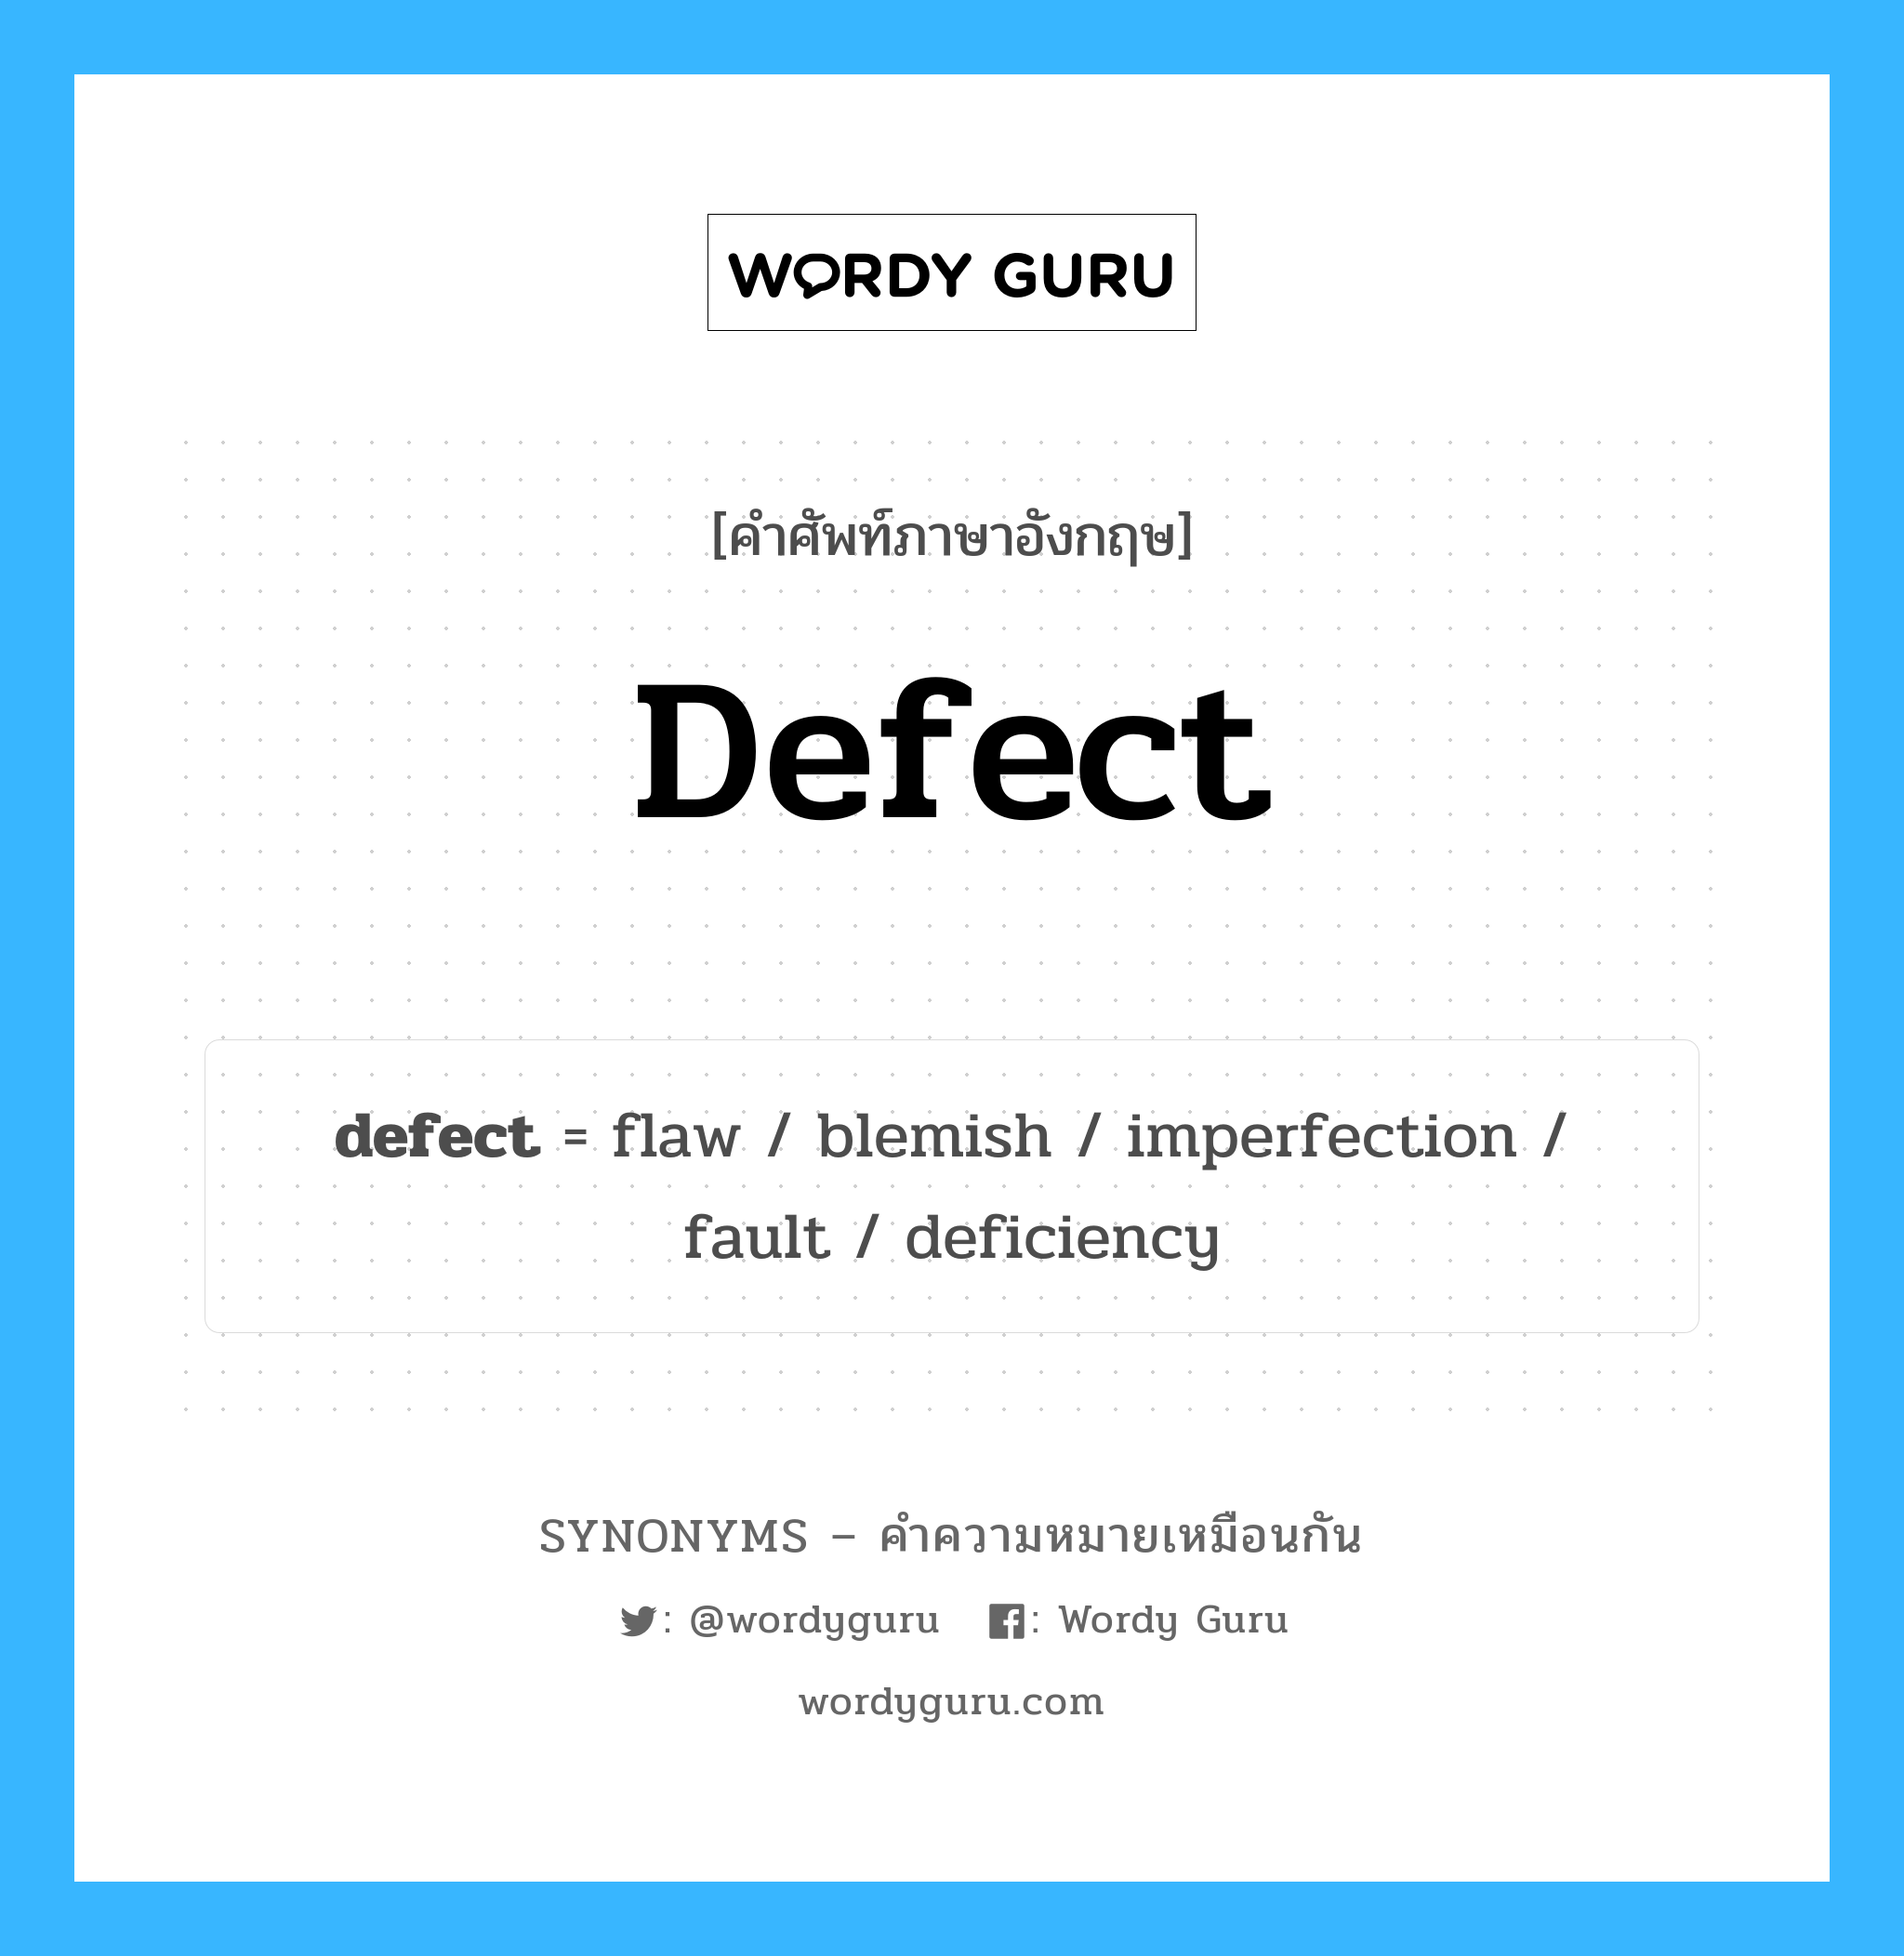 flaw เป็นหนึ่งใน defect และมีคำอื่น ๆ อีกดังนี้, คำศัพท์ภาษาอังกฤษ flaw ความหมายคล้ายกันกับ defect แปลว่า ข้อบกพร่อง หมวด defect